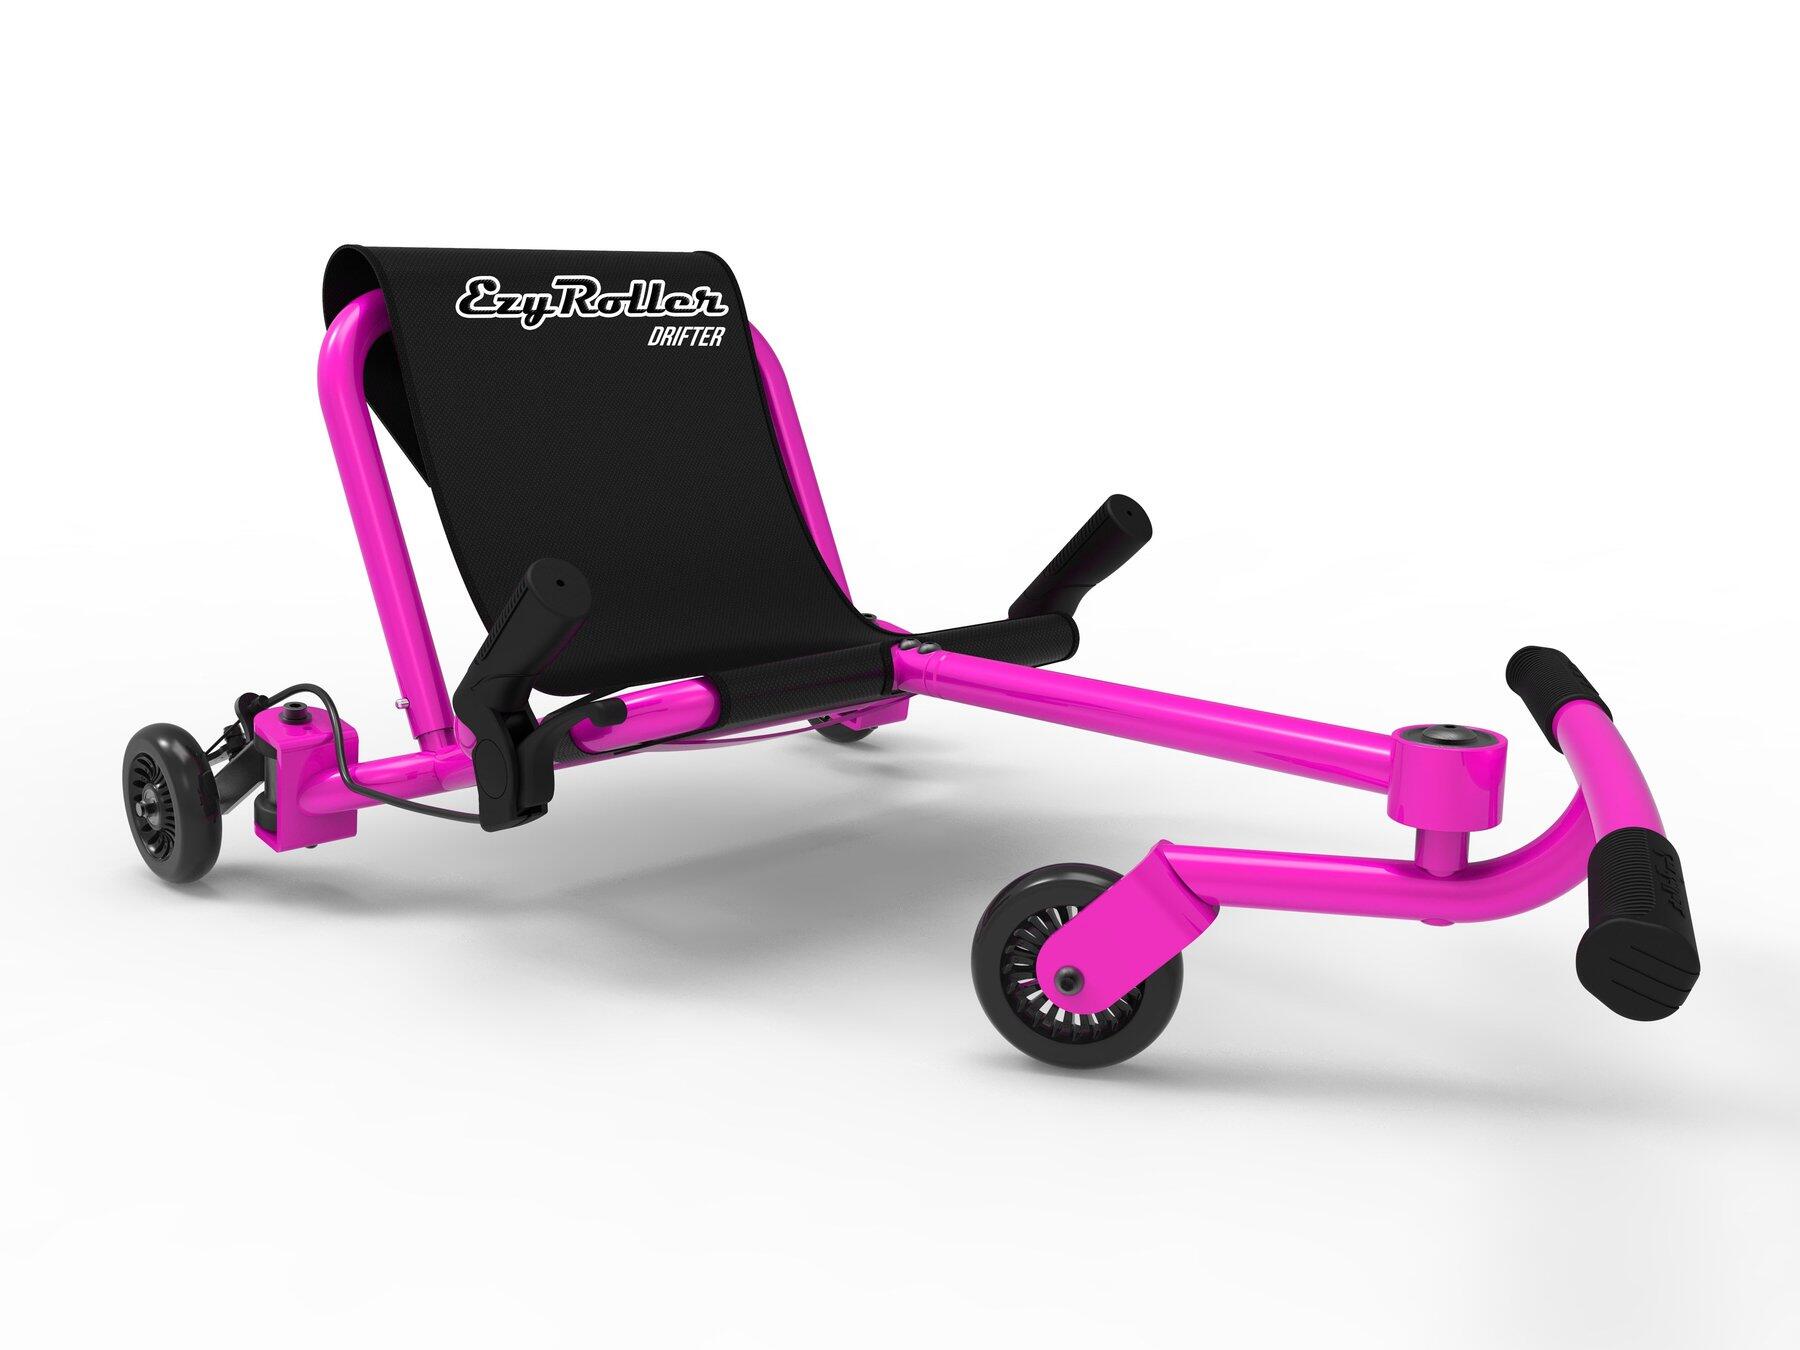 EZYROLLER Ezy Roller DRIFTER Kart Trike Weave Ride On - Pink